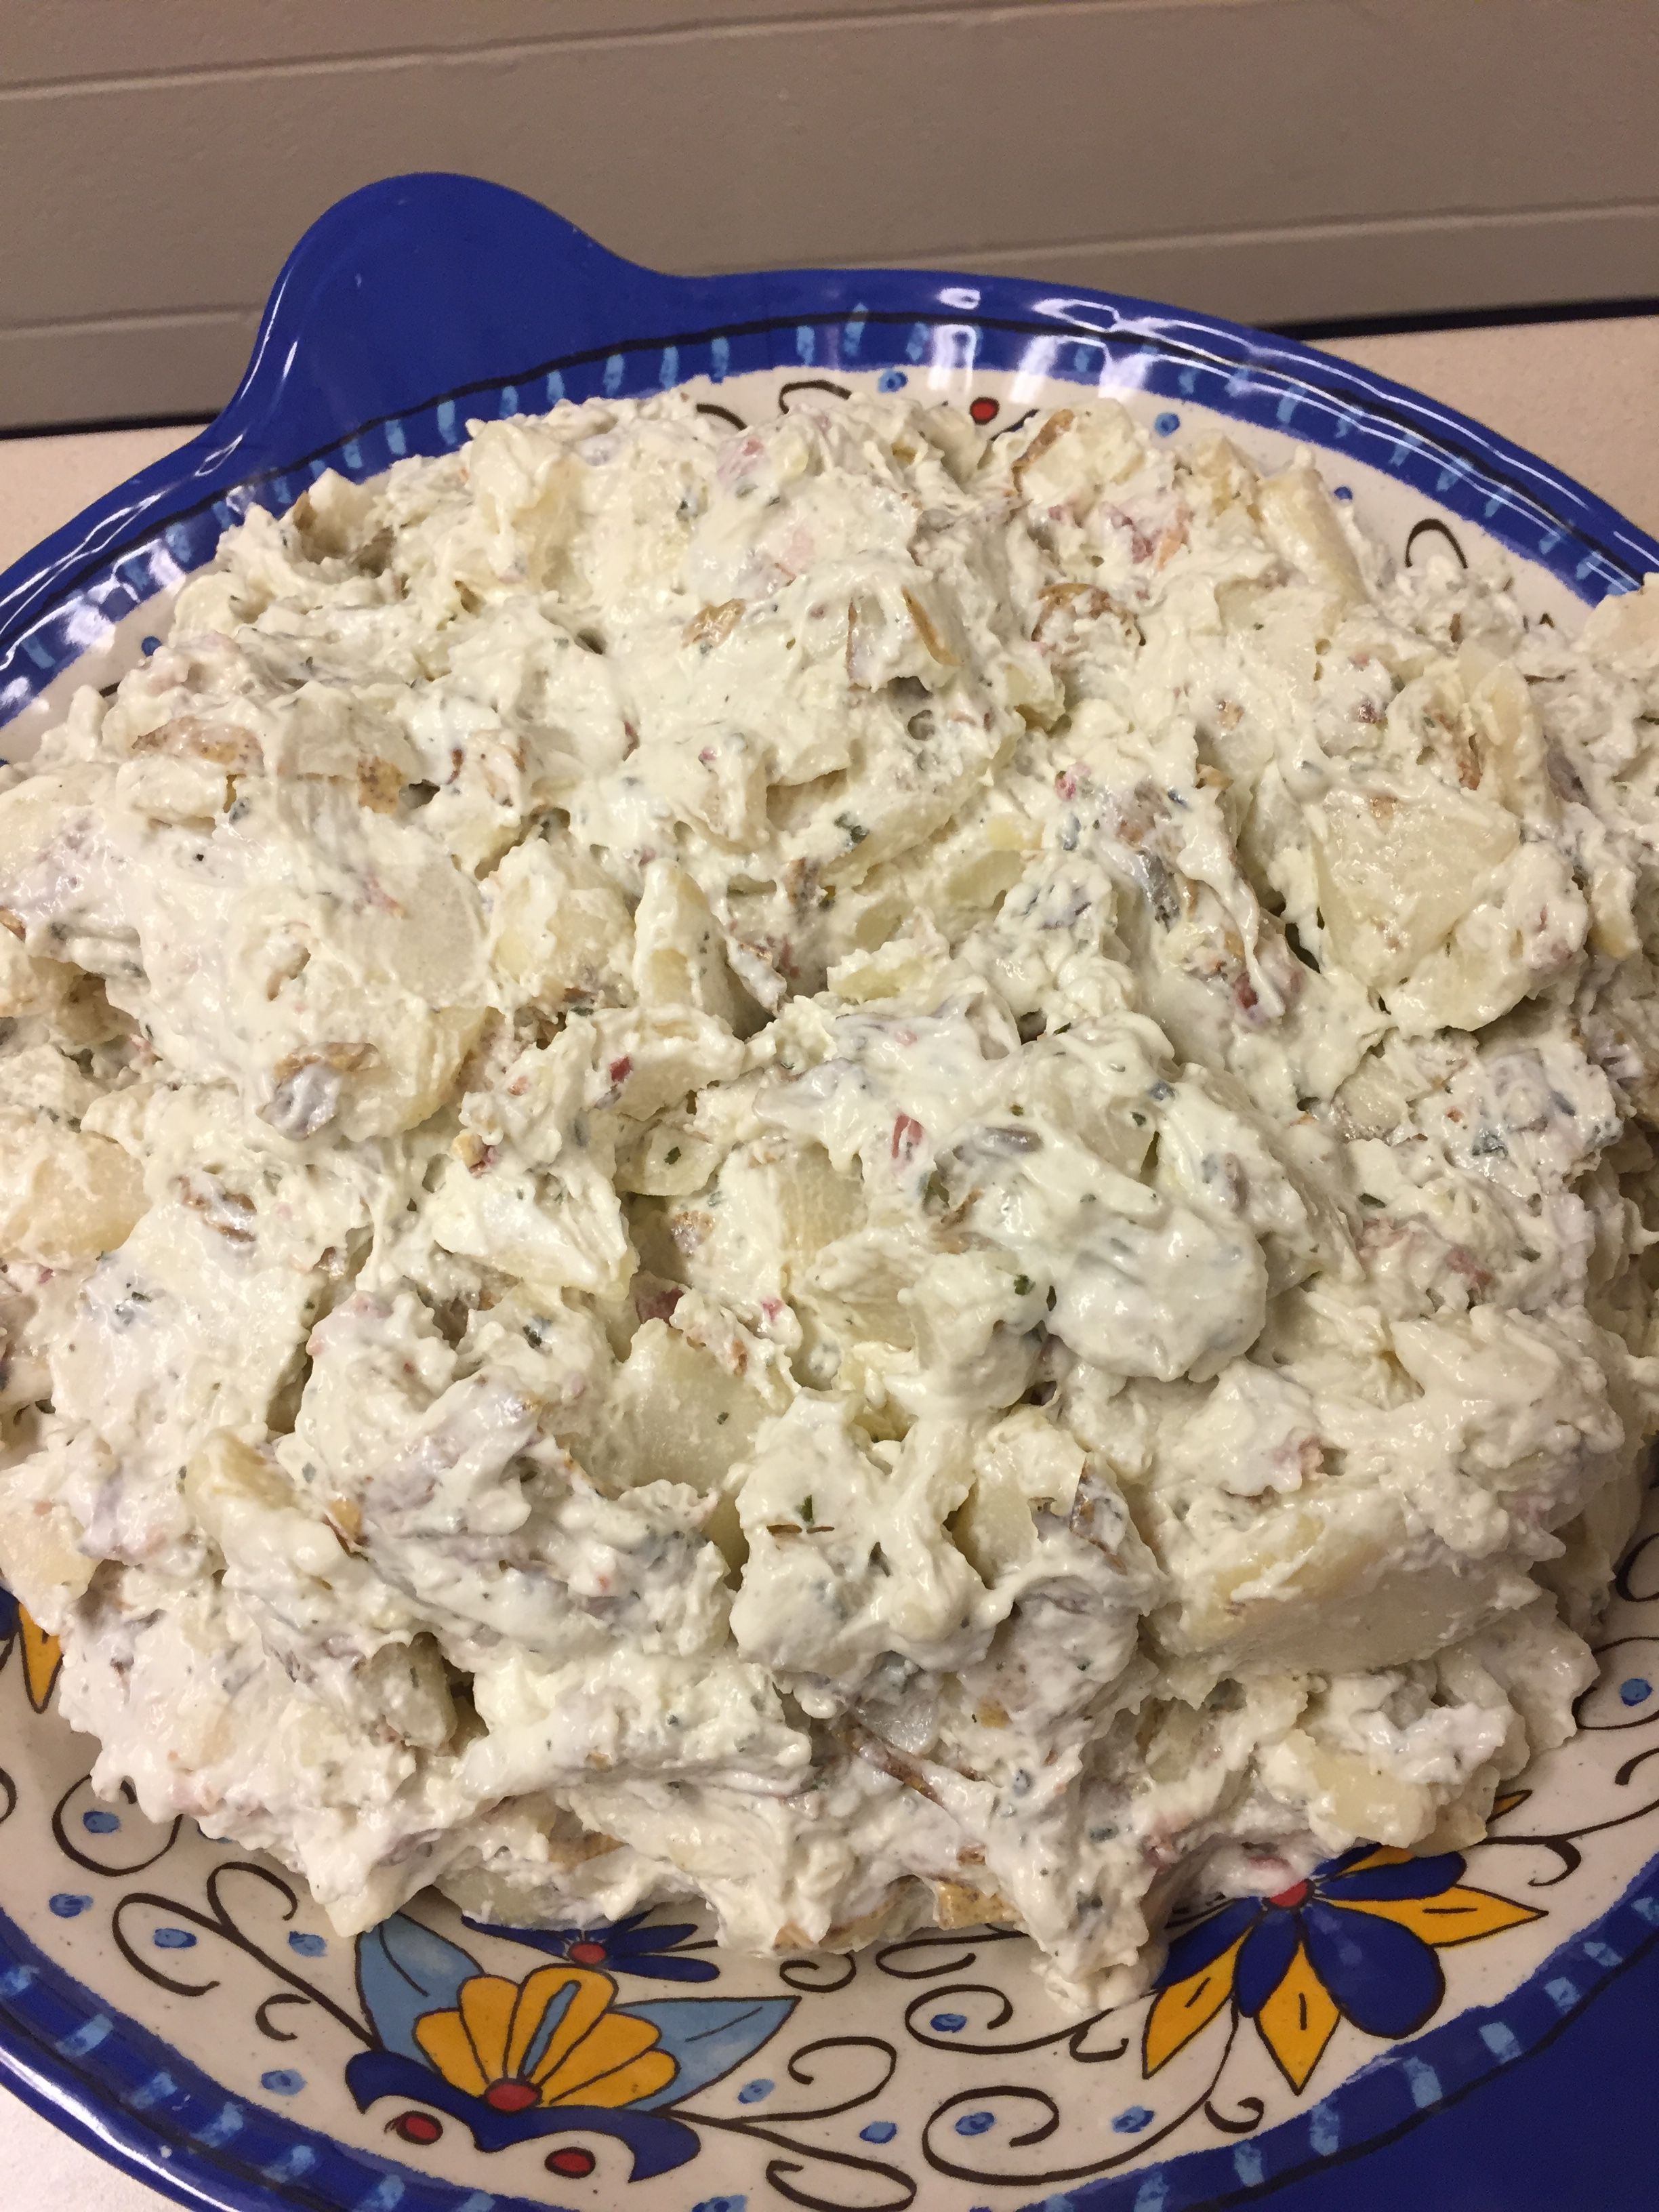 Loaded Baked Potato Salad Pan